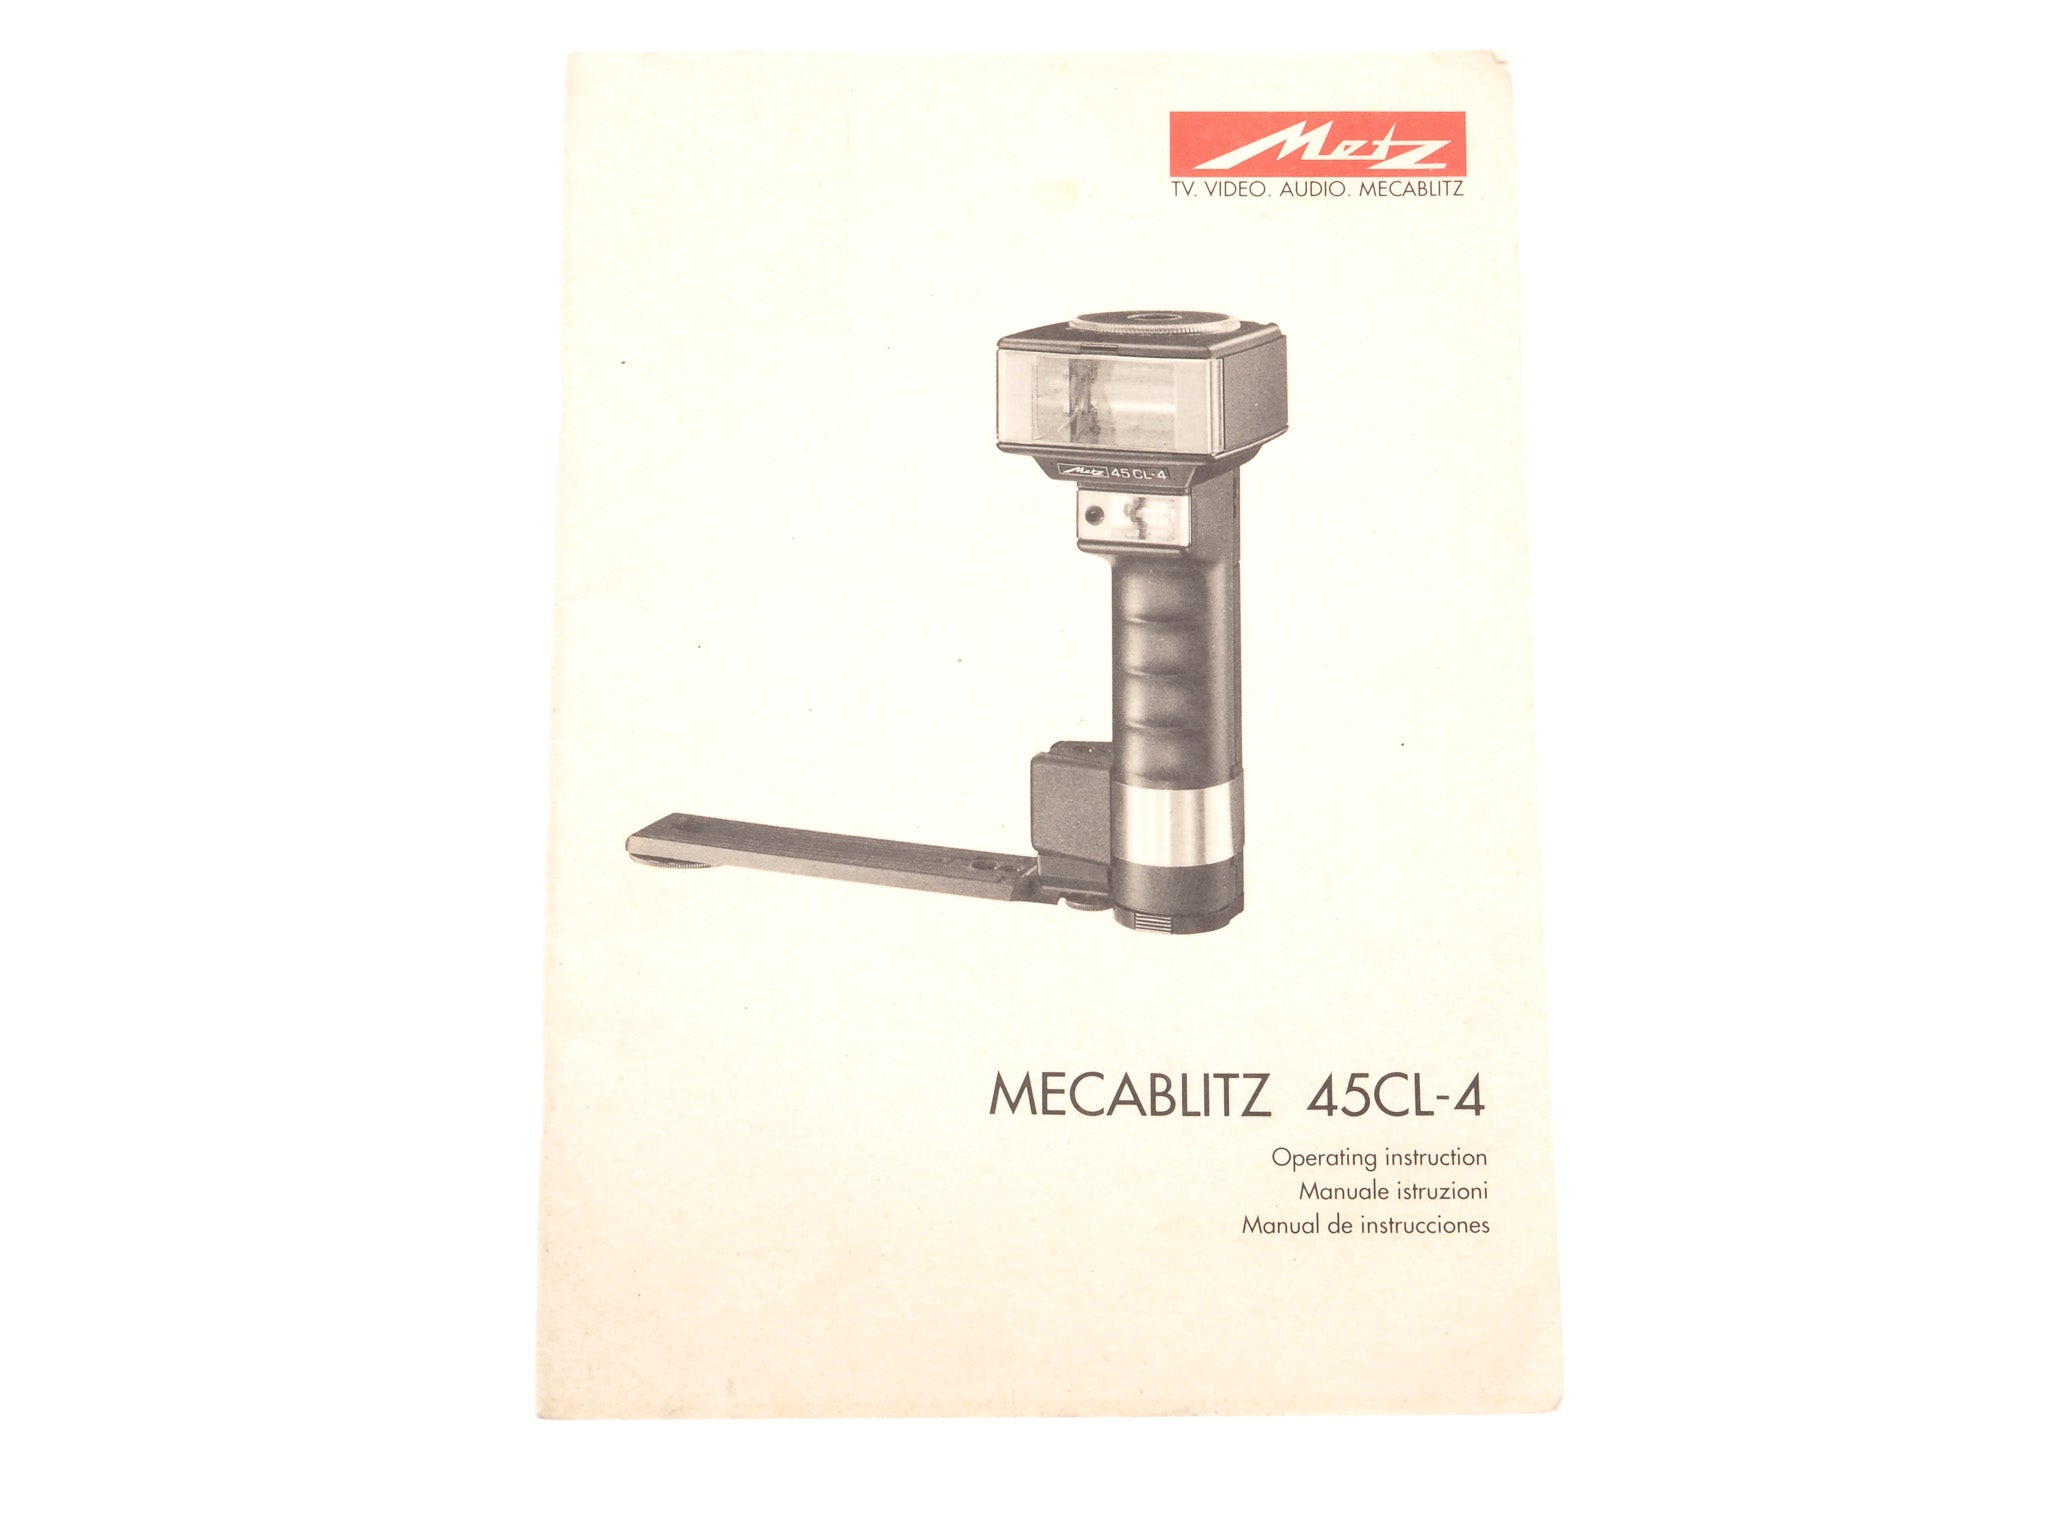 Metz Mecablitz 45CL-4 Instructions